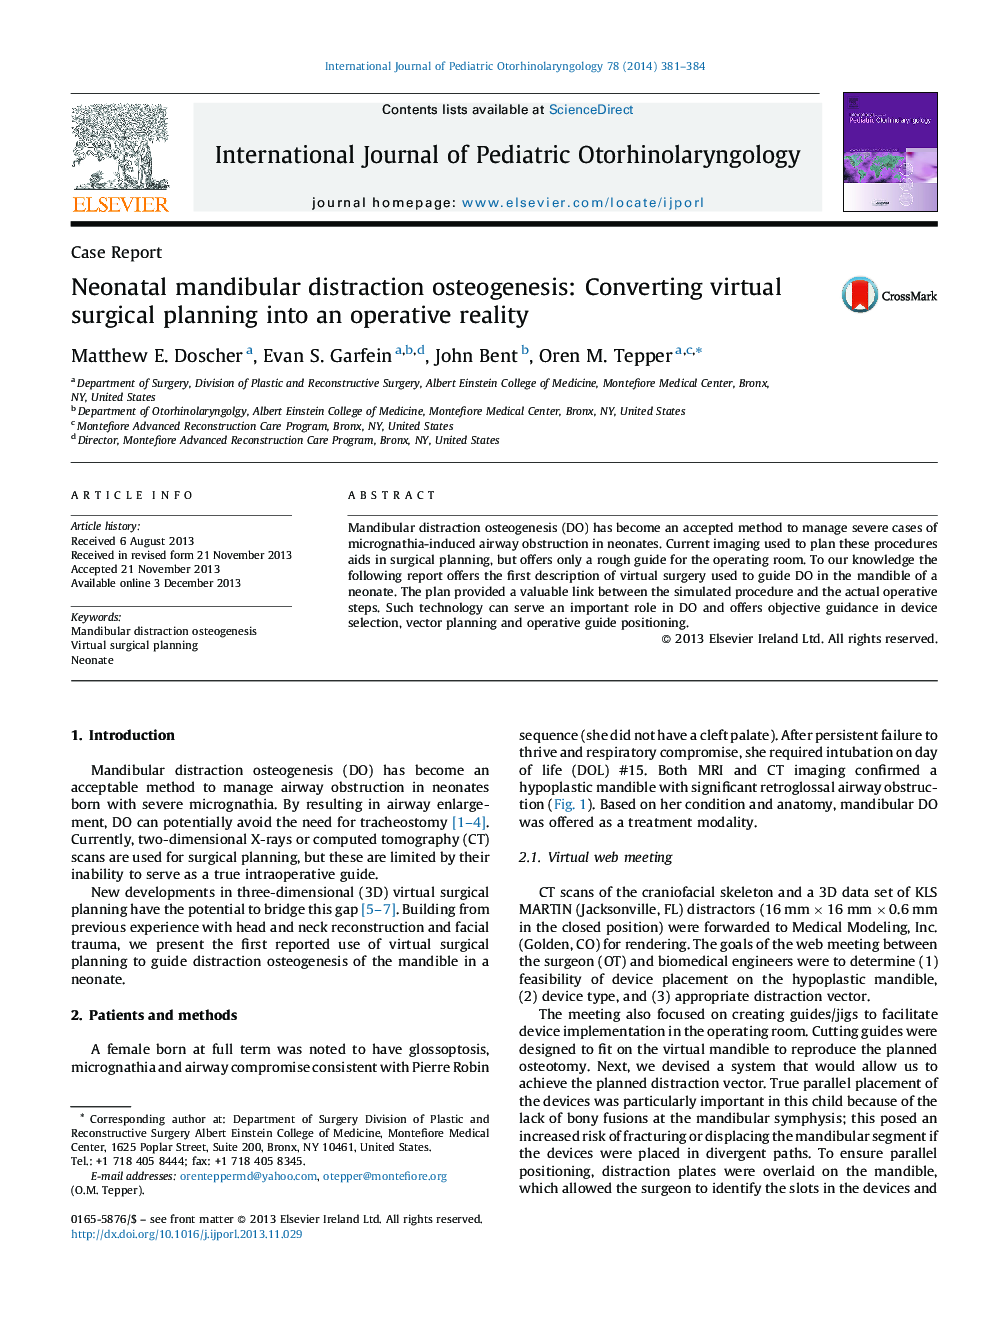 Neonatal mandibular distraction osteogenesis: Converting virtual surgical planning into an operative reality